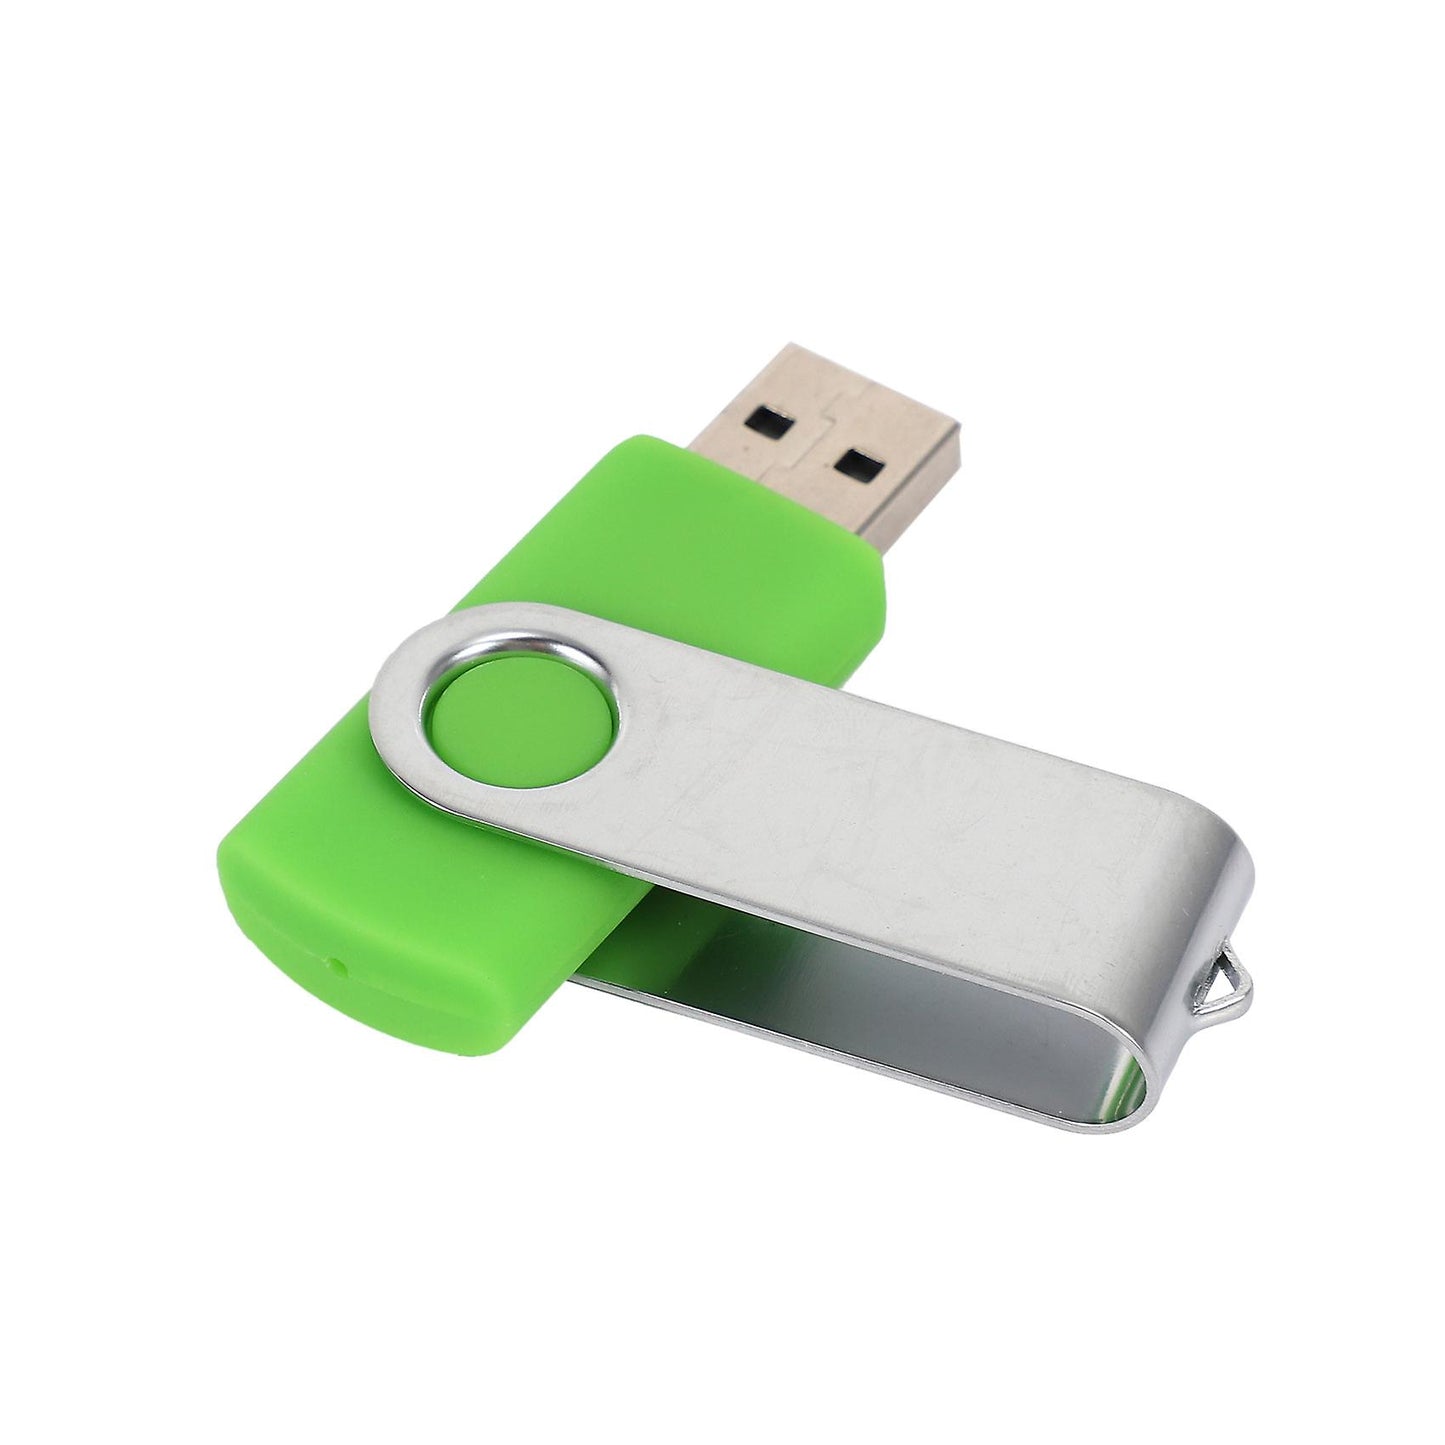 Usb Memory Stick 256GB, green